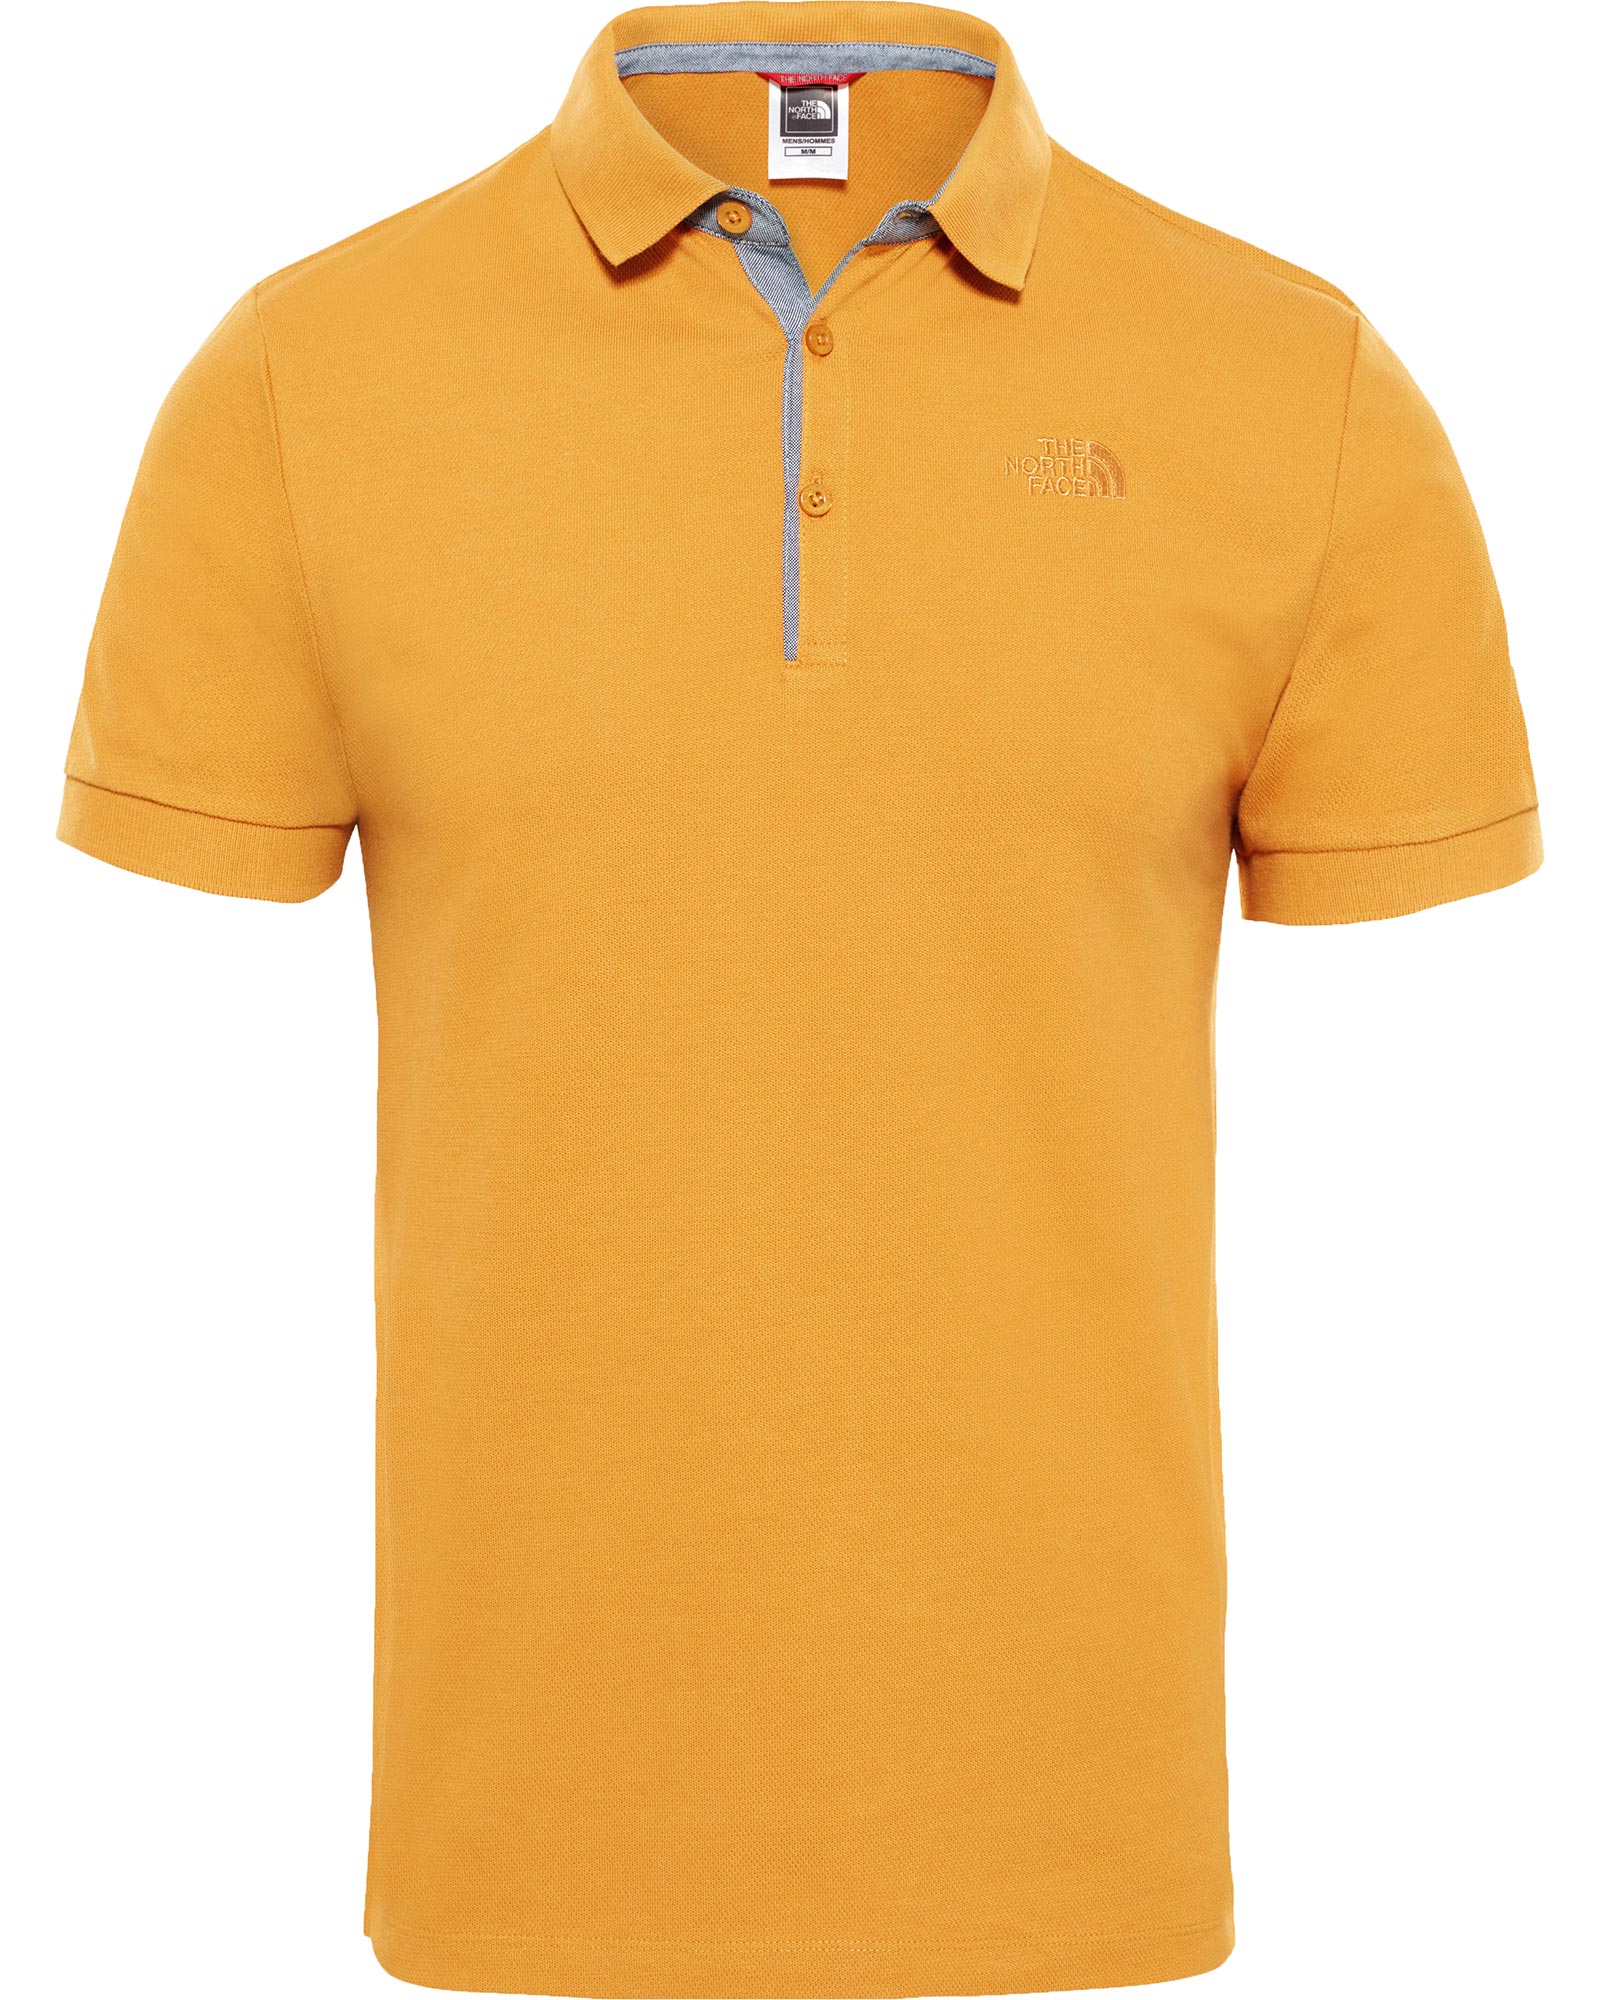 The North Face Premium Men’s Piquet Polo T Shirt - Citrine Yellow S